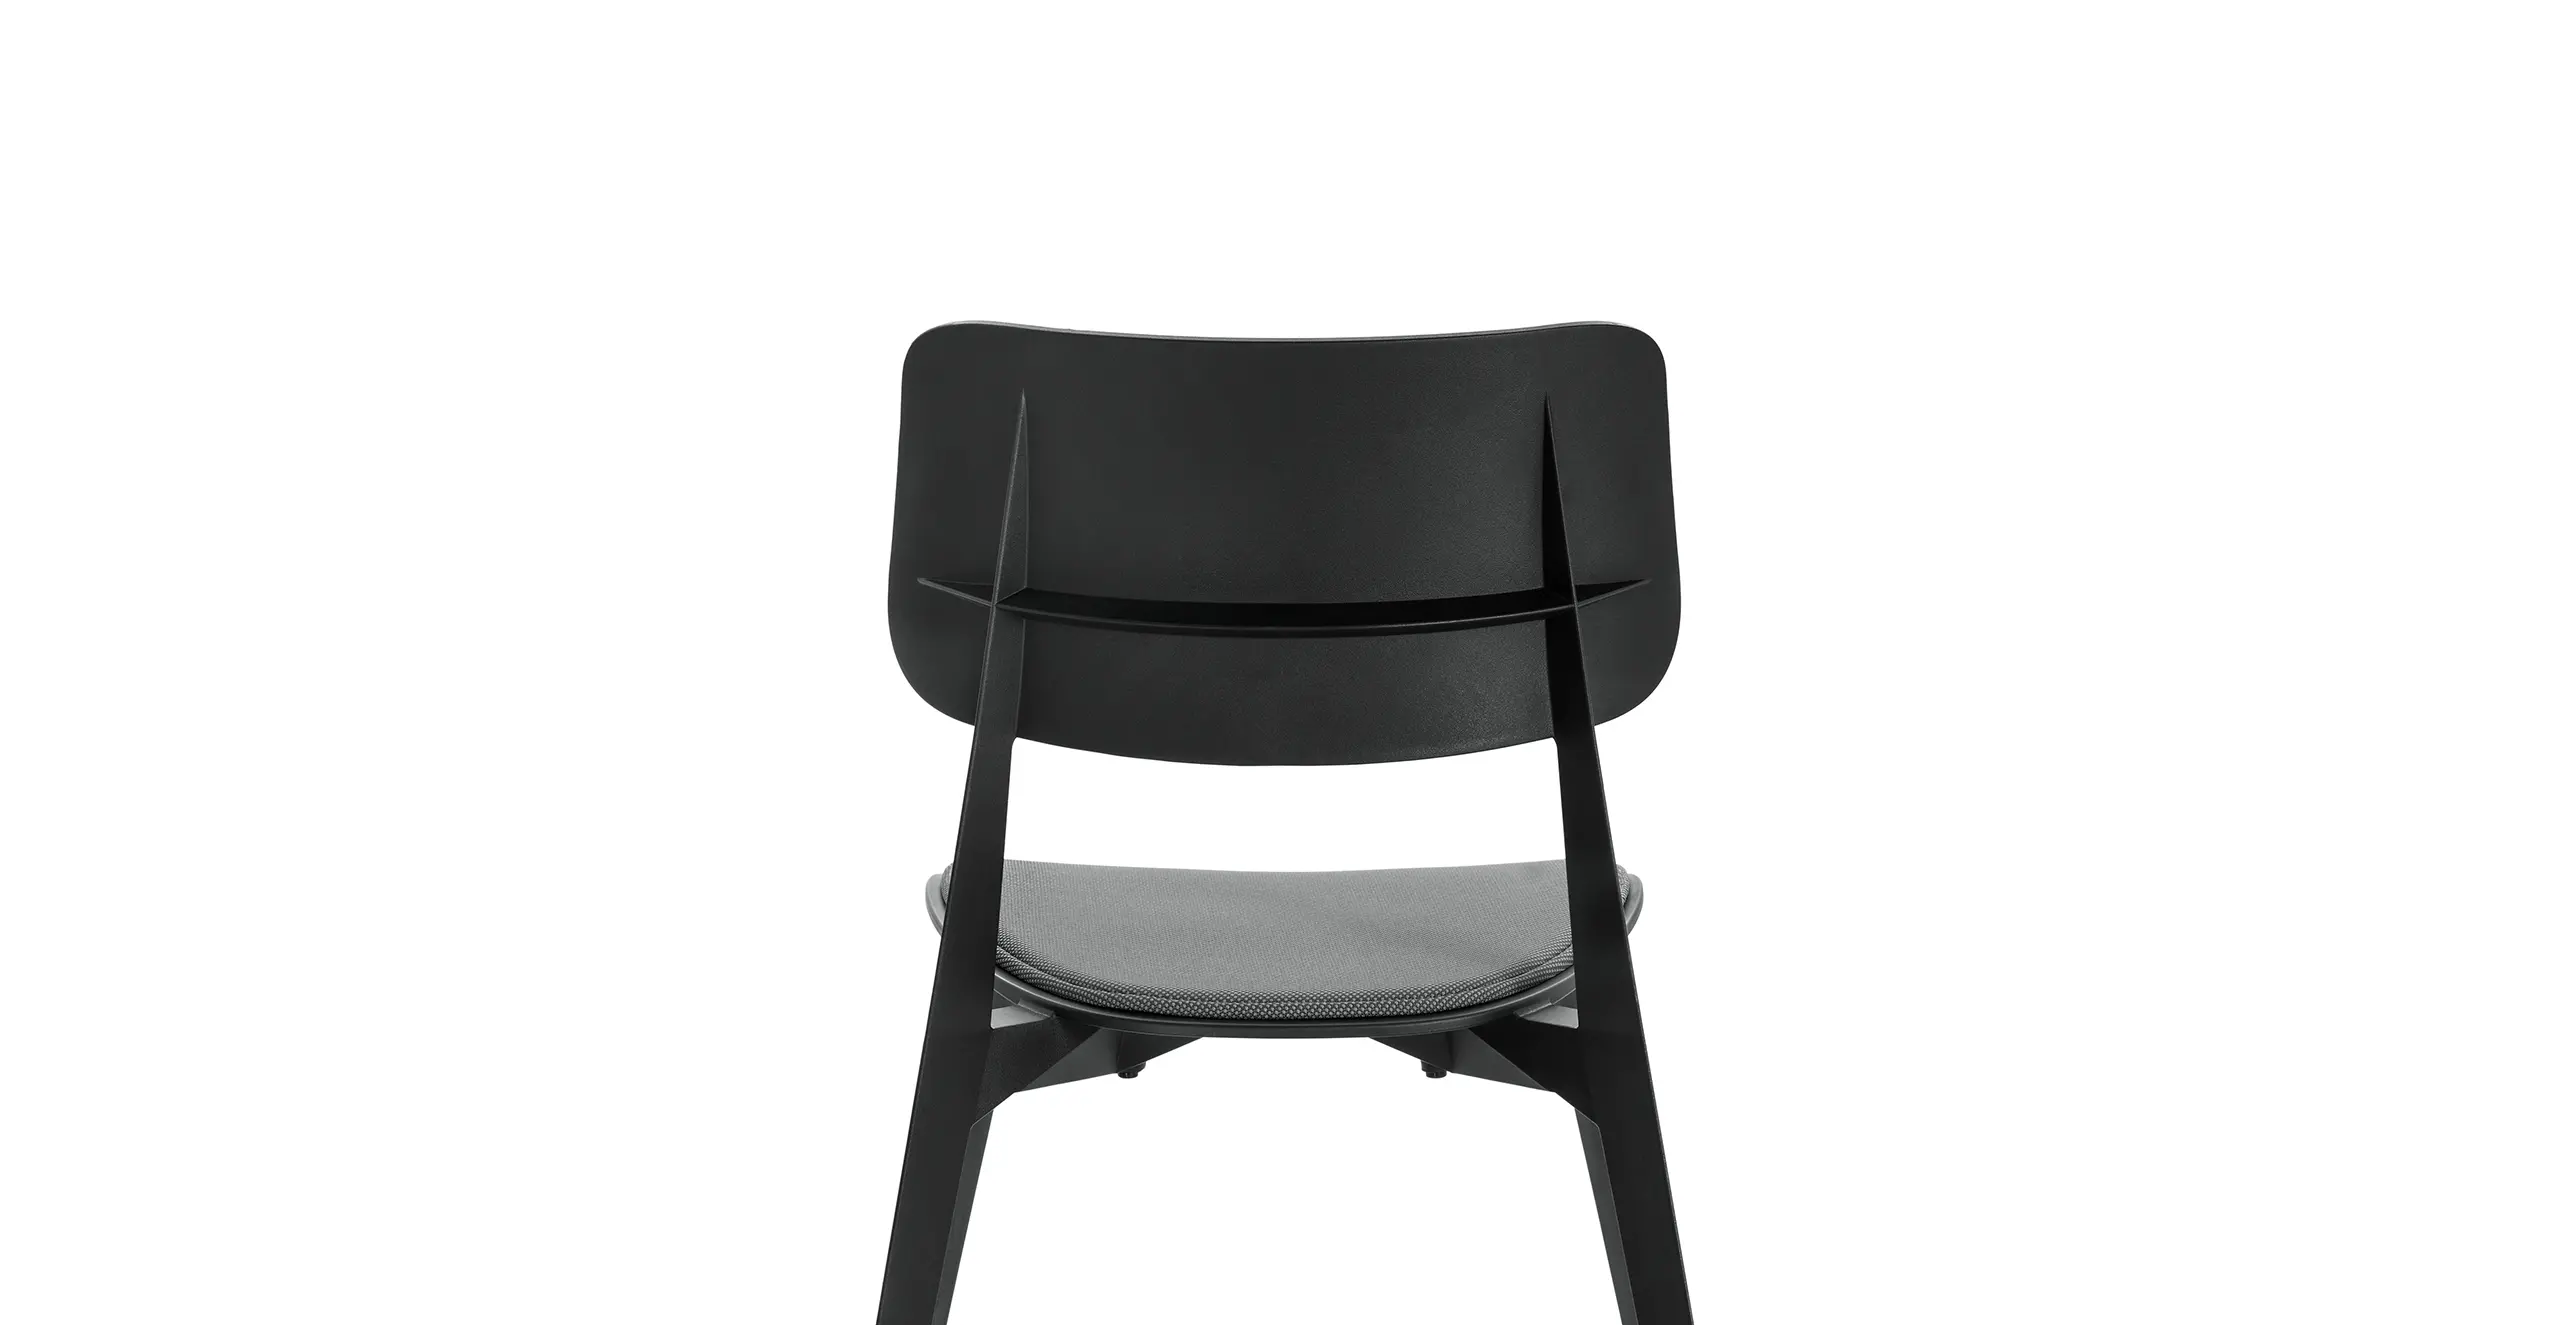 Stellar Chair by TOOU design